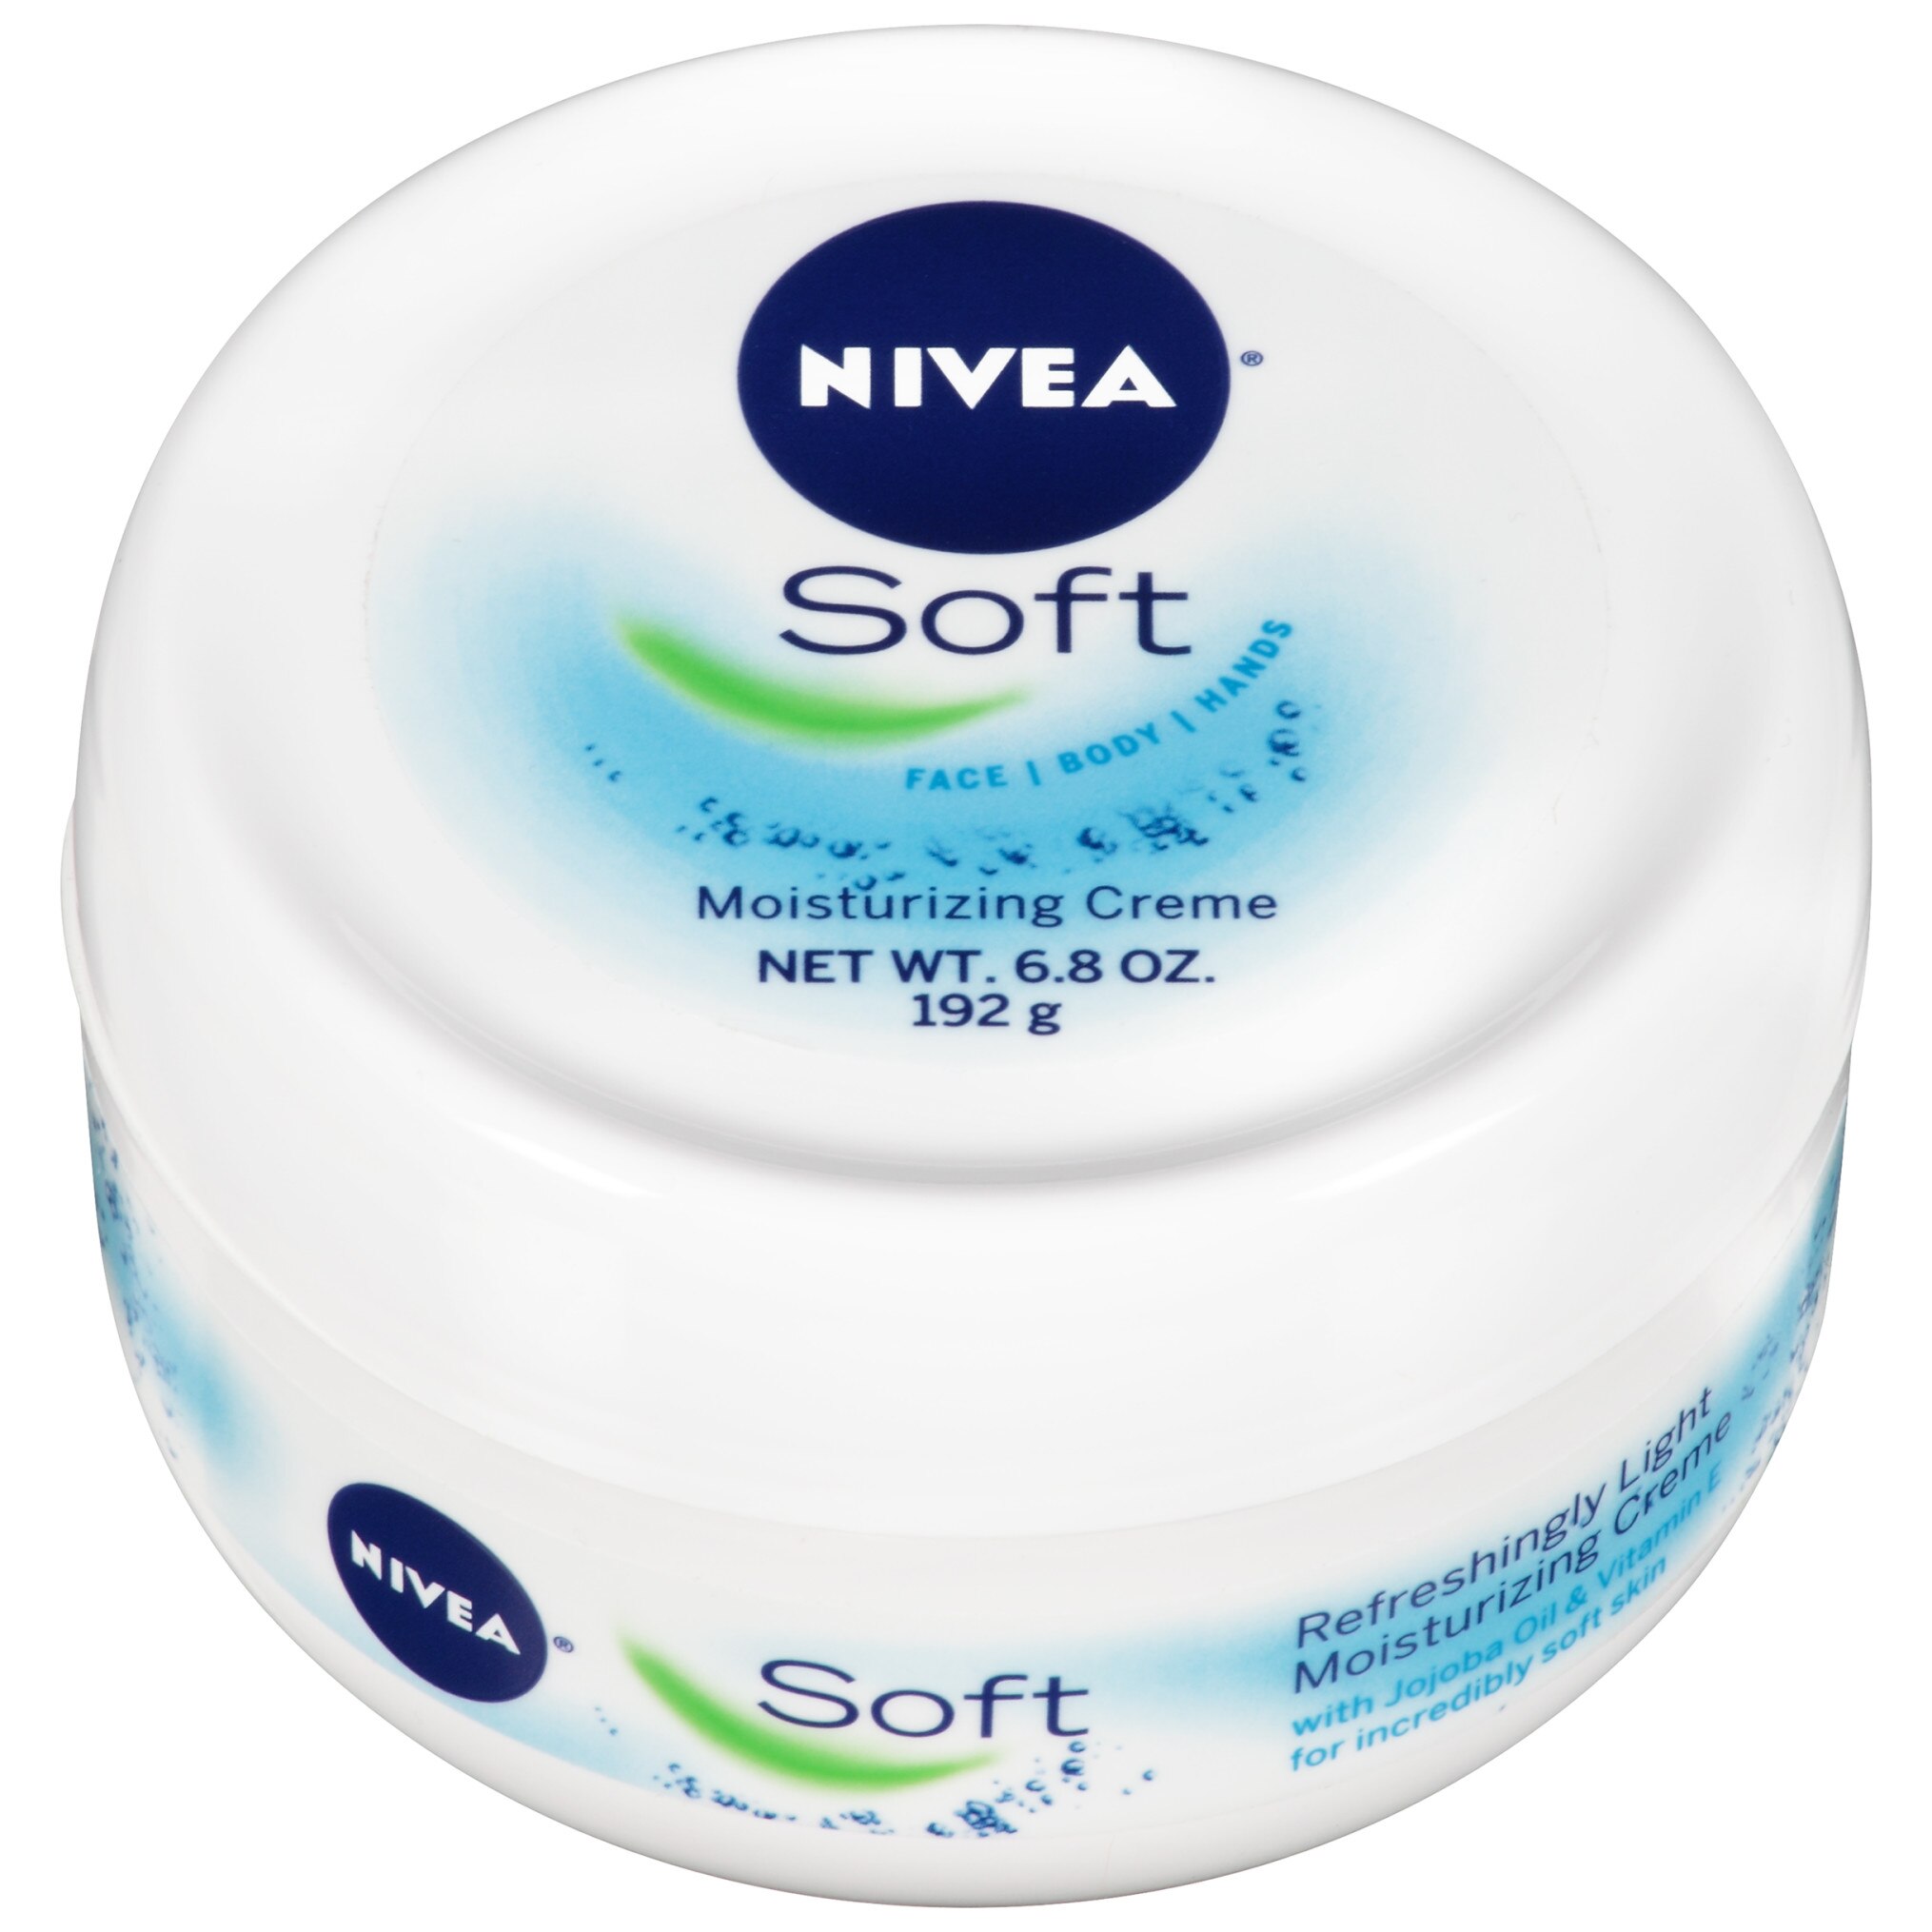 NIVEA Soft Moisturizing Creme Body, Face Hand Cream, 6.8 OZ | Pick Up In Store at